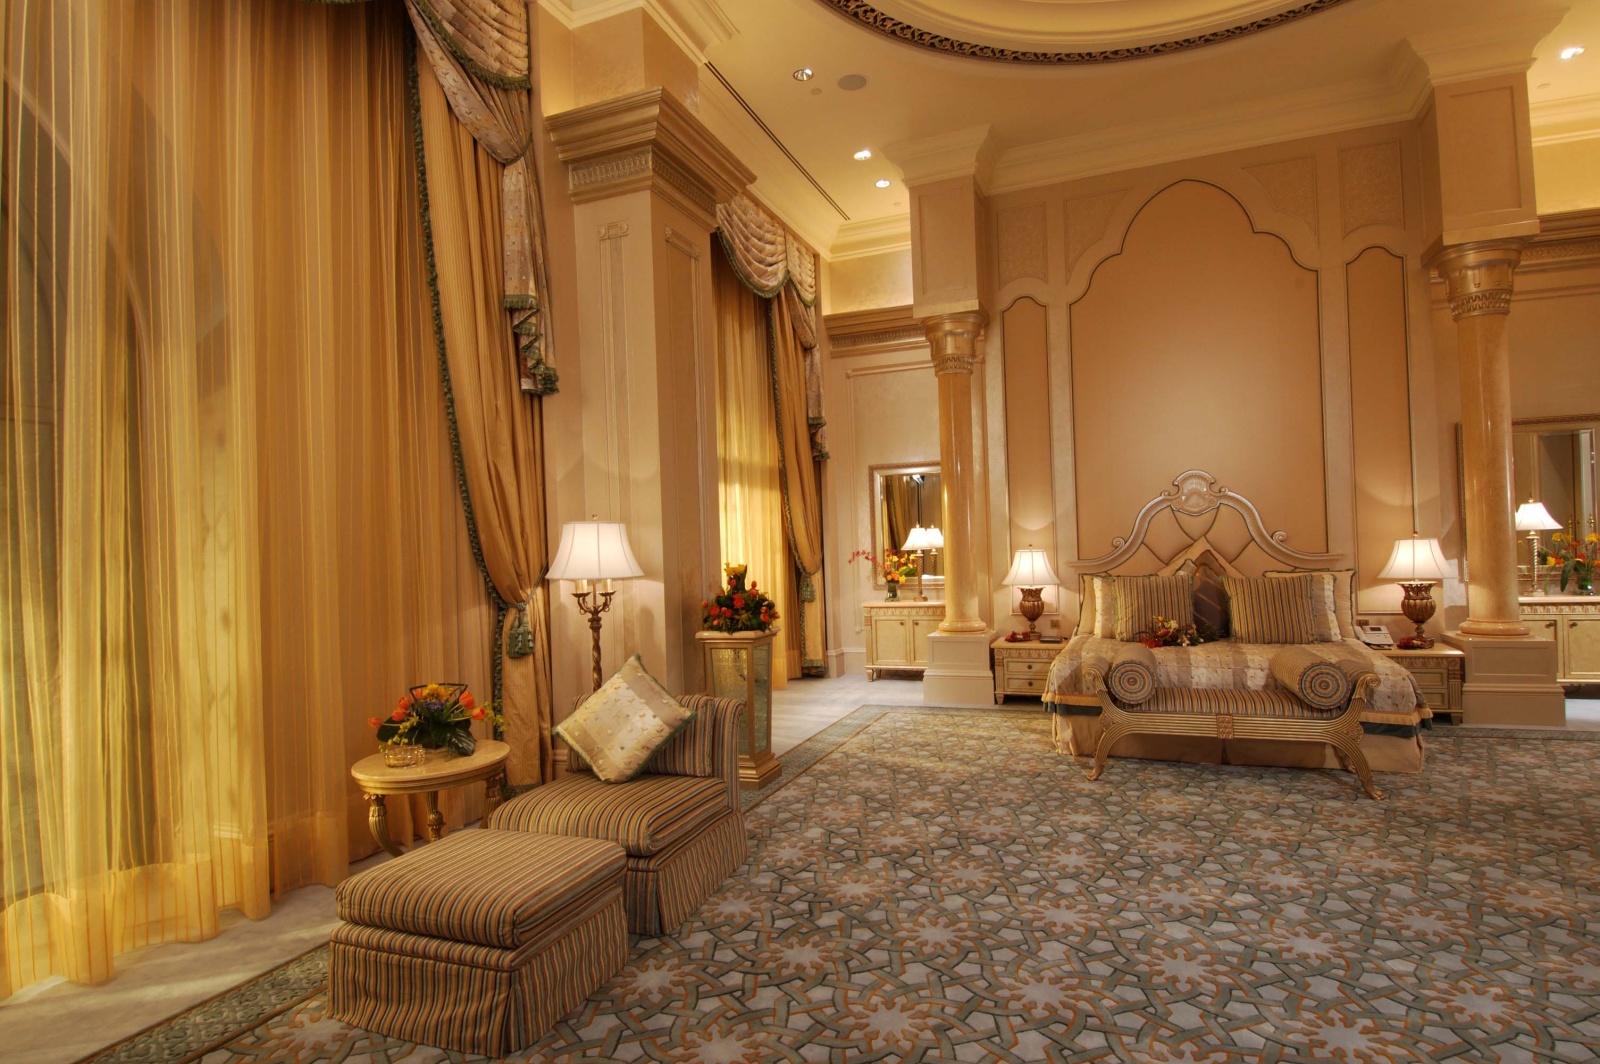 Emirates Palace Mandarin Oriental Abu Dhabi 7 Star Luxury In Abu Dhabi